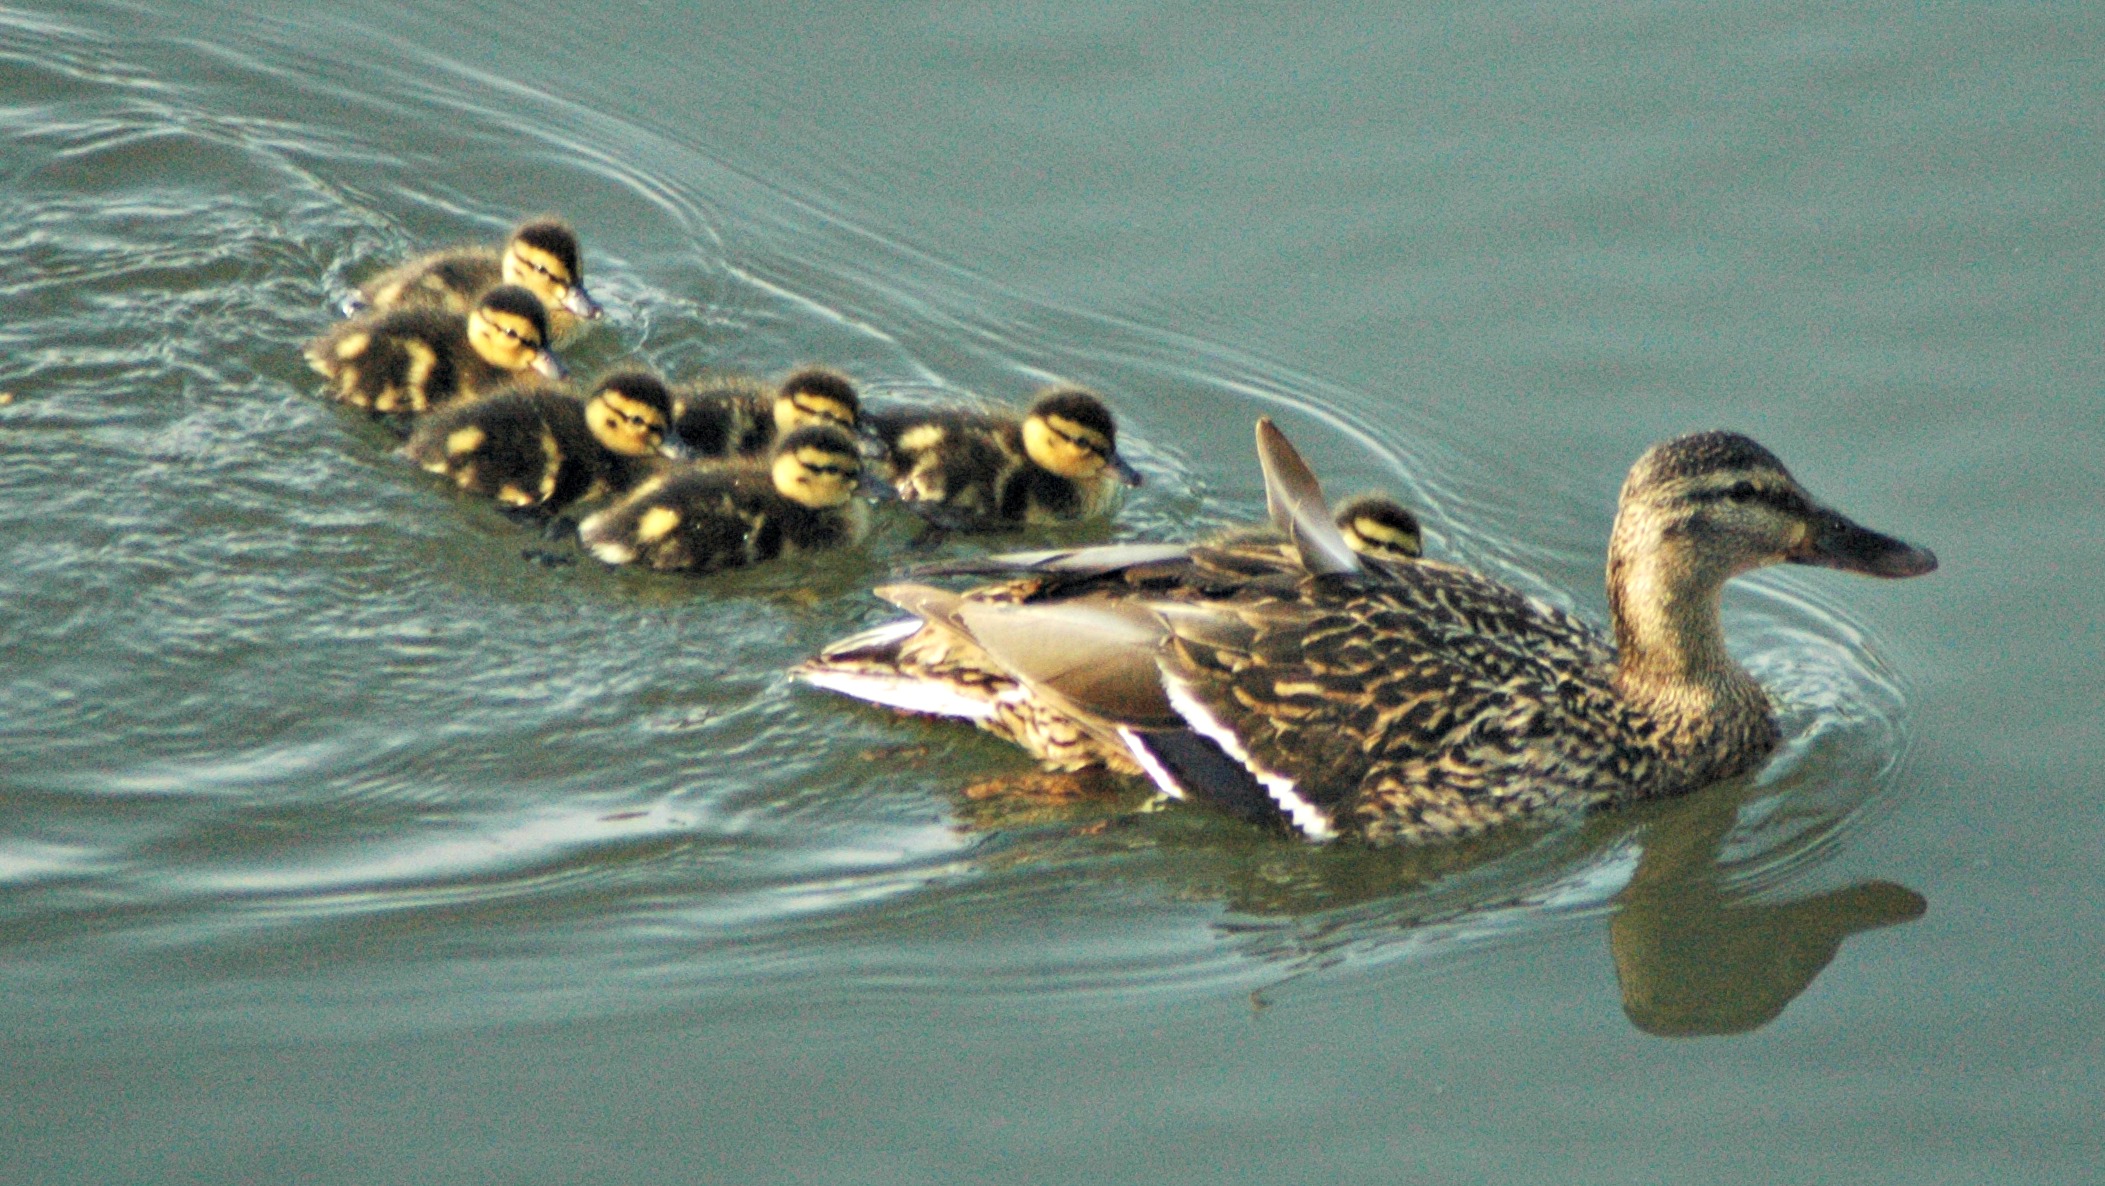 Mallard ducklings - mallard duck nesting habit